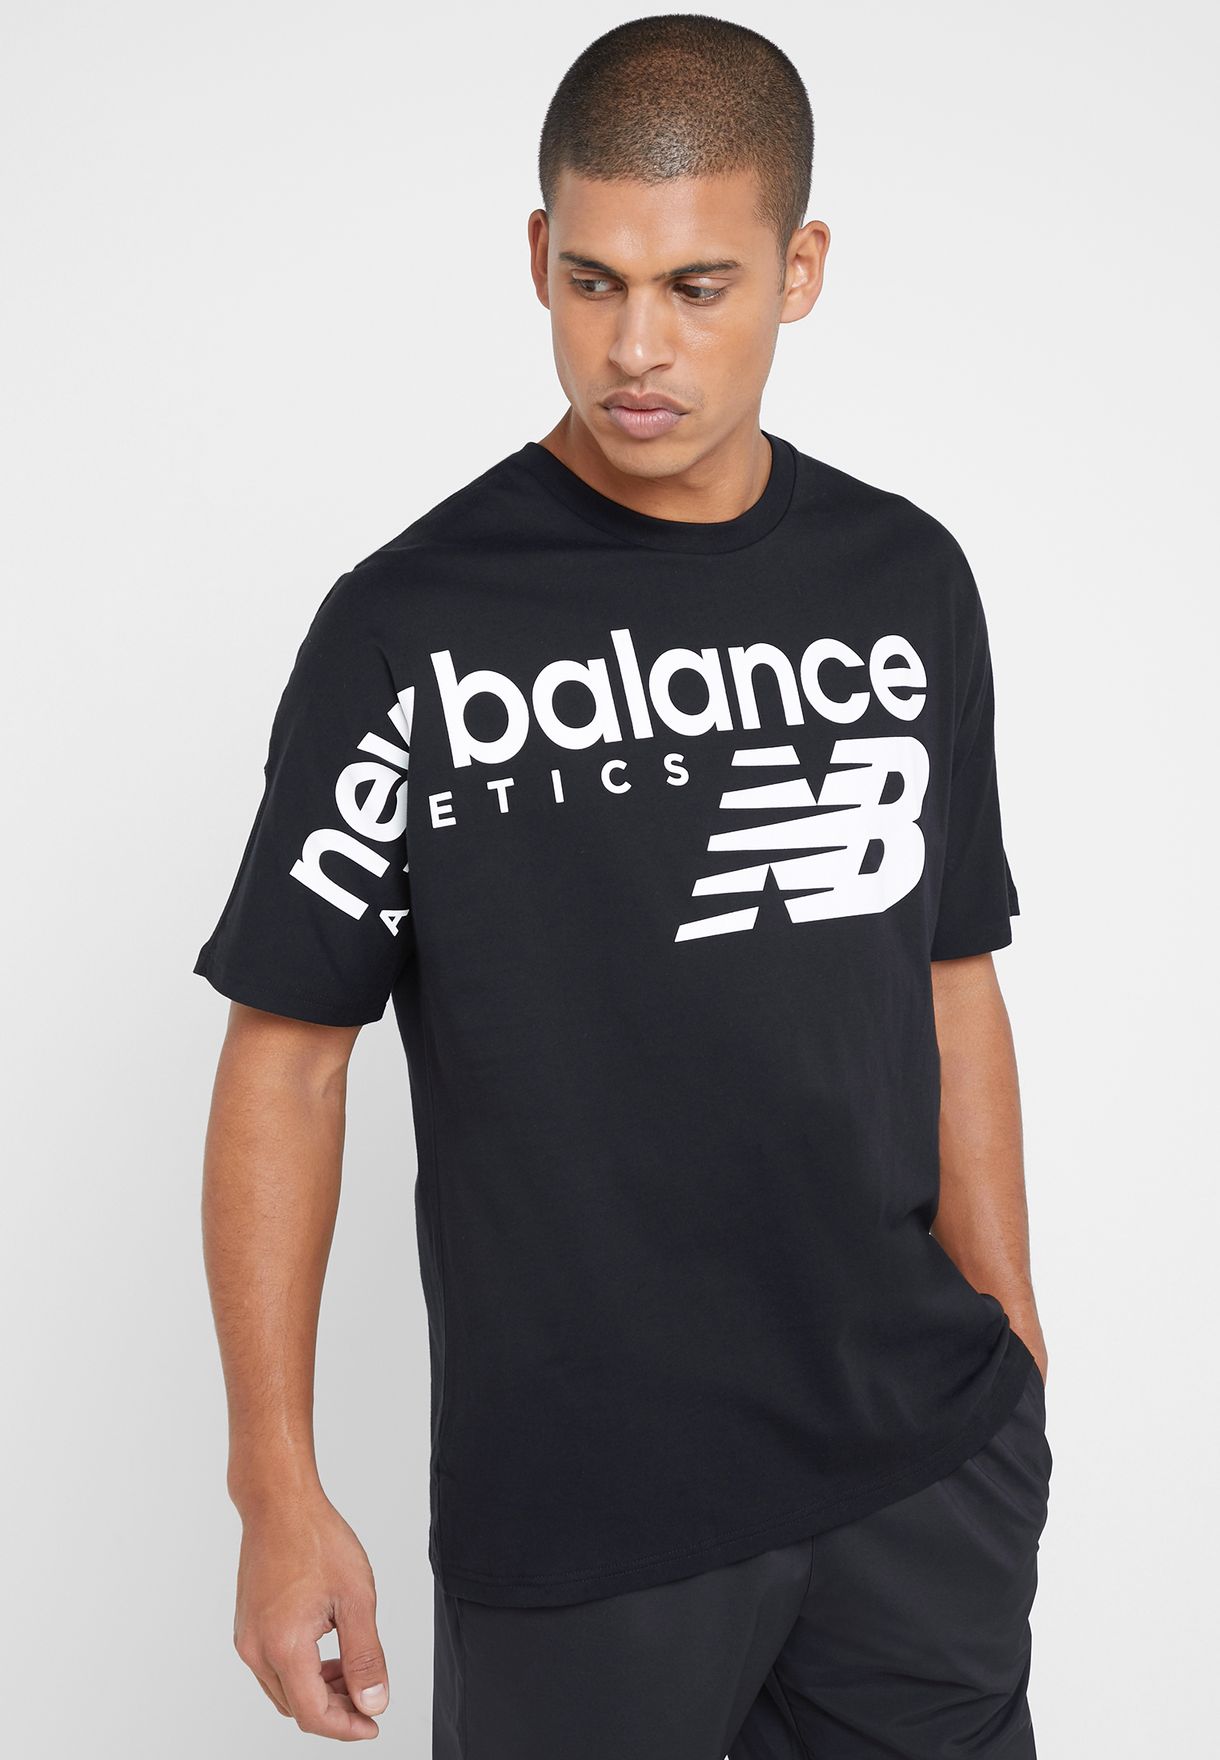 new balance athletics t shirt